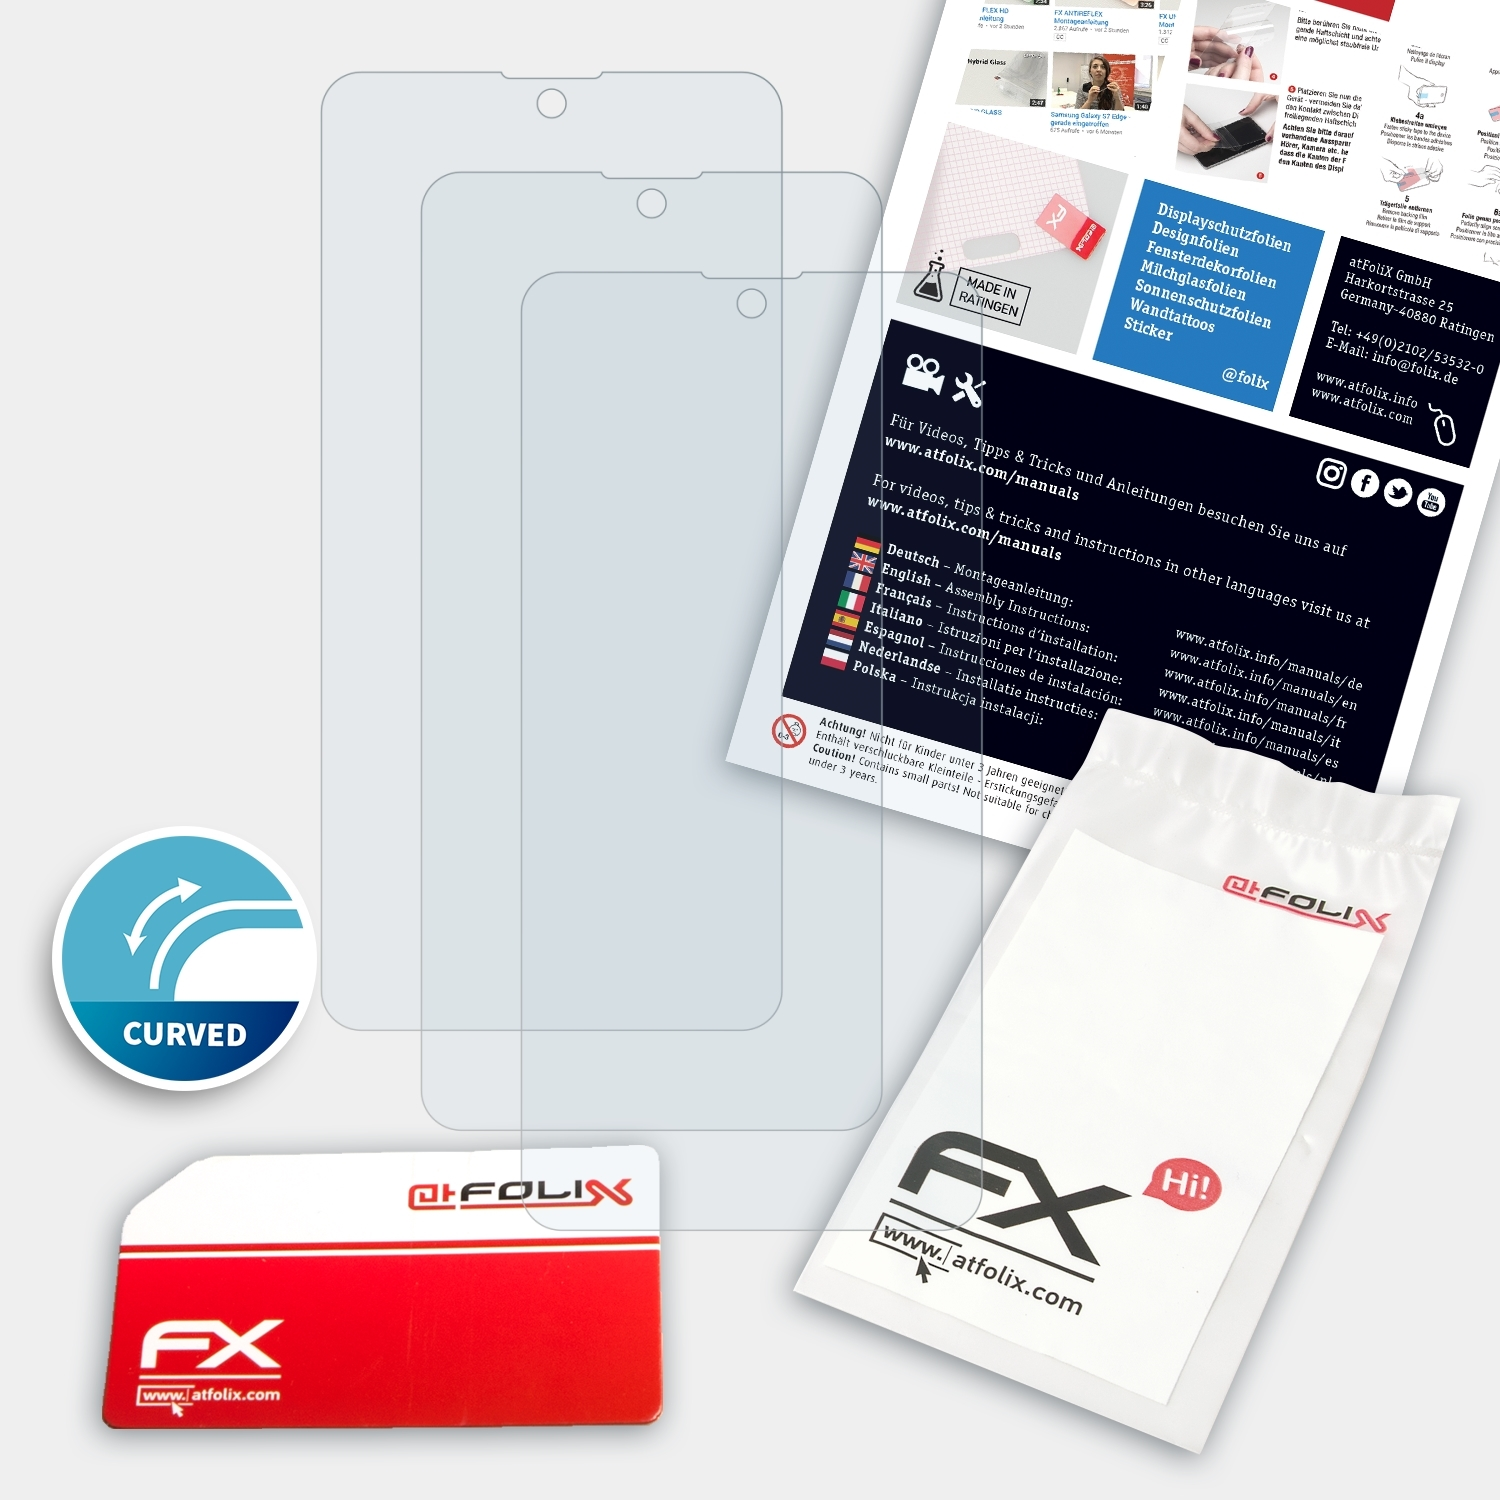 ATFOLIX 3x FX-ActiFleX Sony Ace II Displayschutz(für (SO-41B)) Xperia